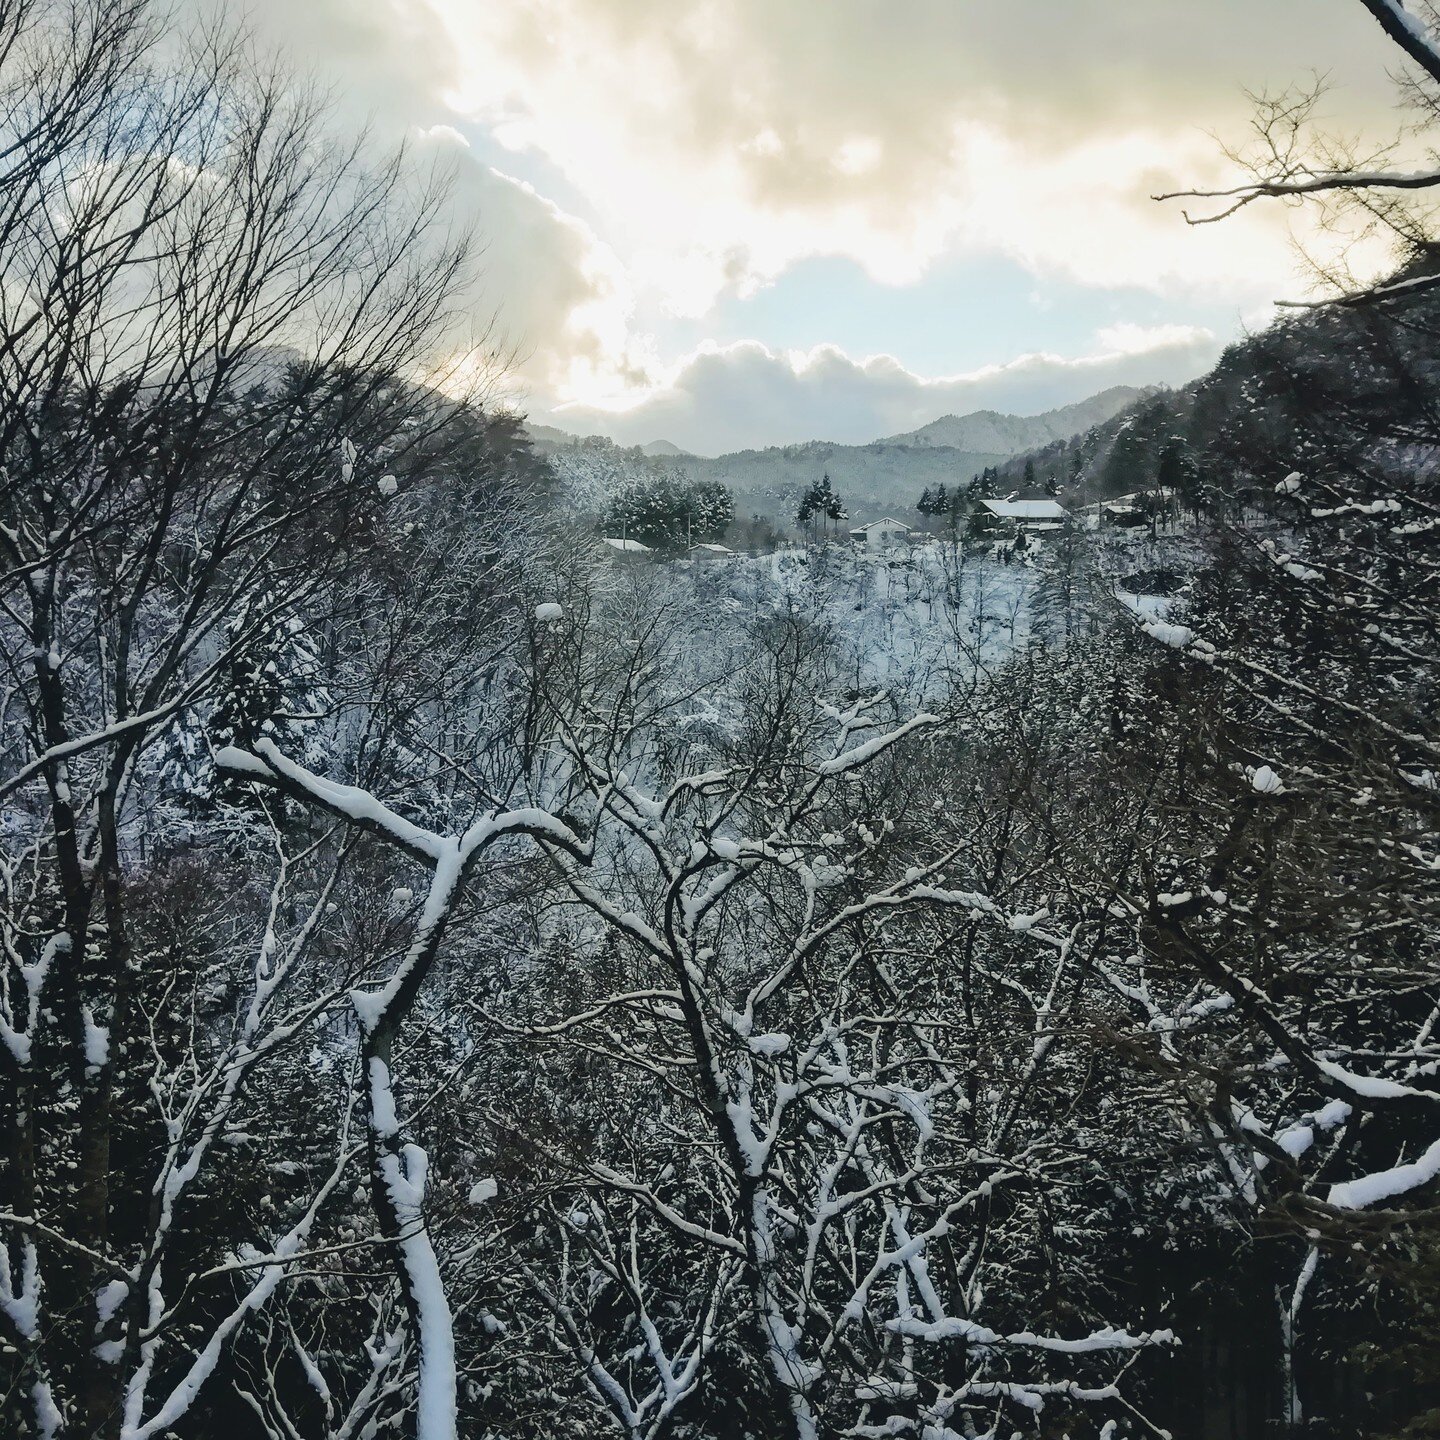 Otaki, snowed in
#otakivillage#kiso#ruraljapan#mtontake#japaninwinter#王滝村#木曽#御嶽山#冬景色